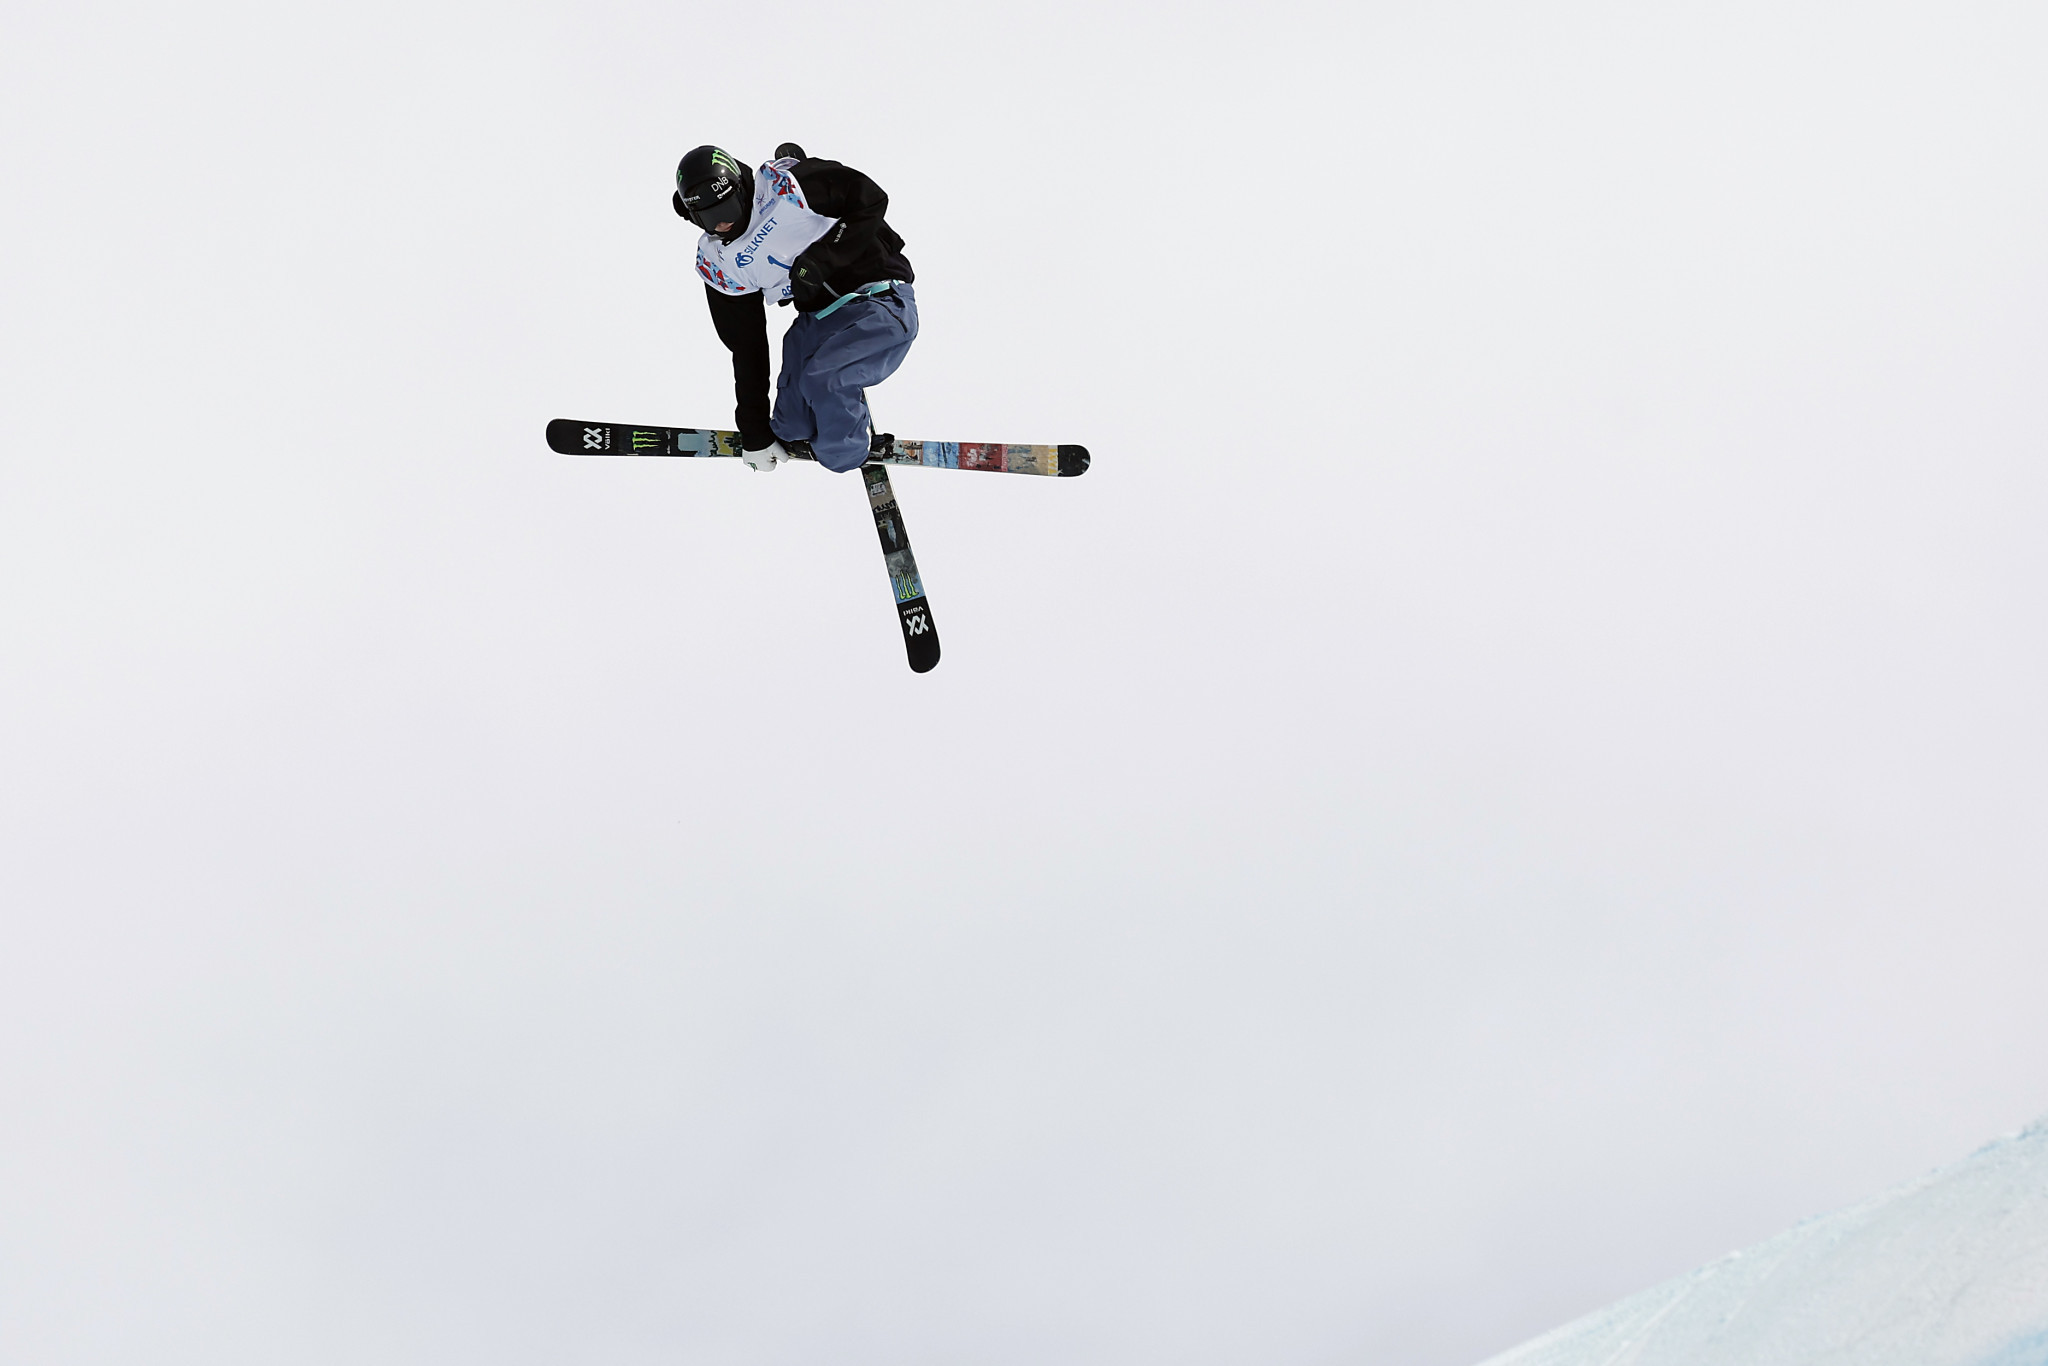 Birk Ruud won the men's freeski slopestyle title at the Bakuriani 2023 World Championships ©Getty Images